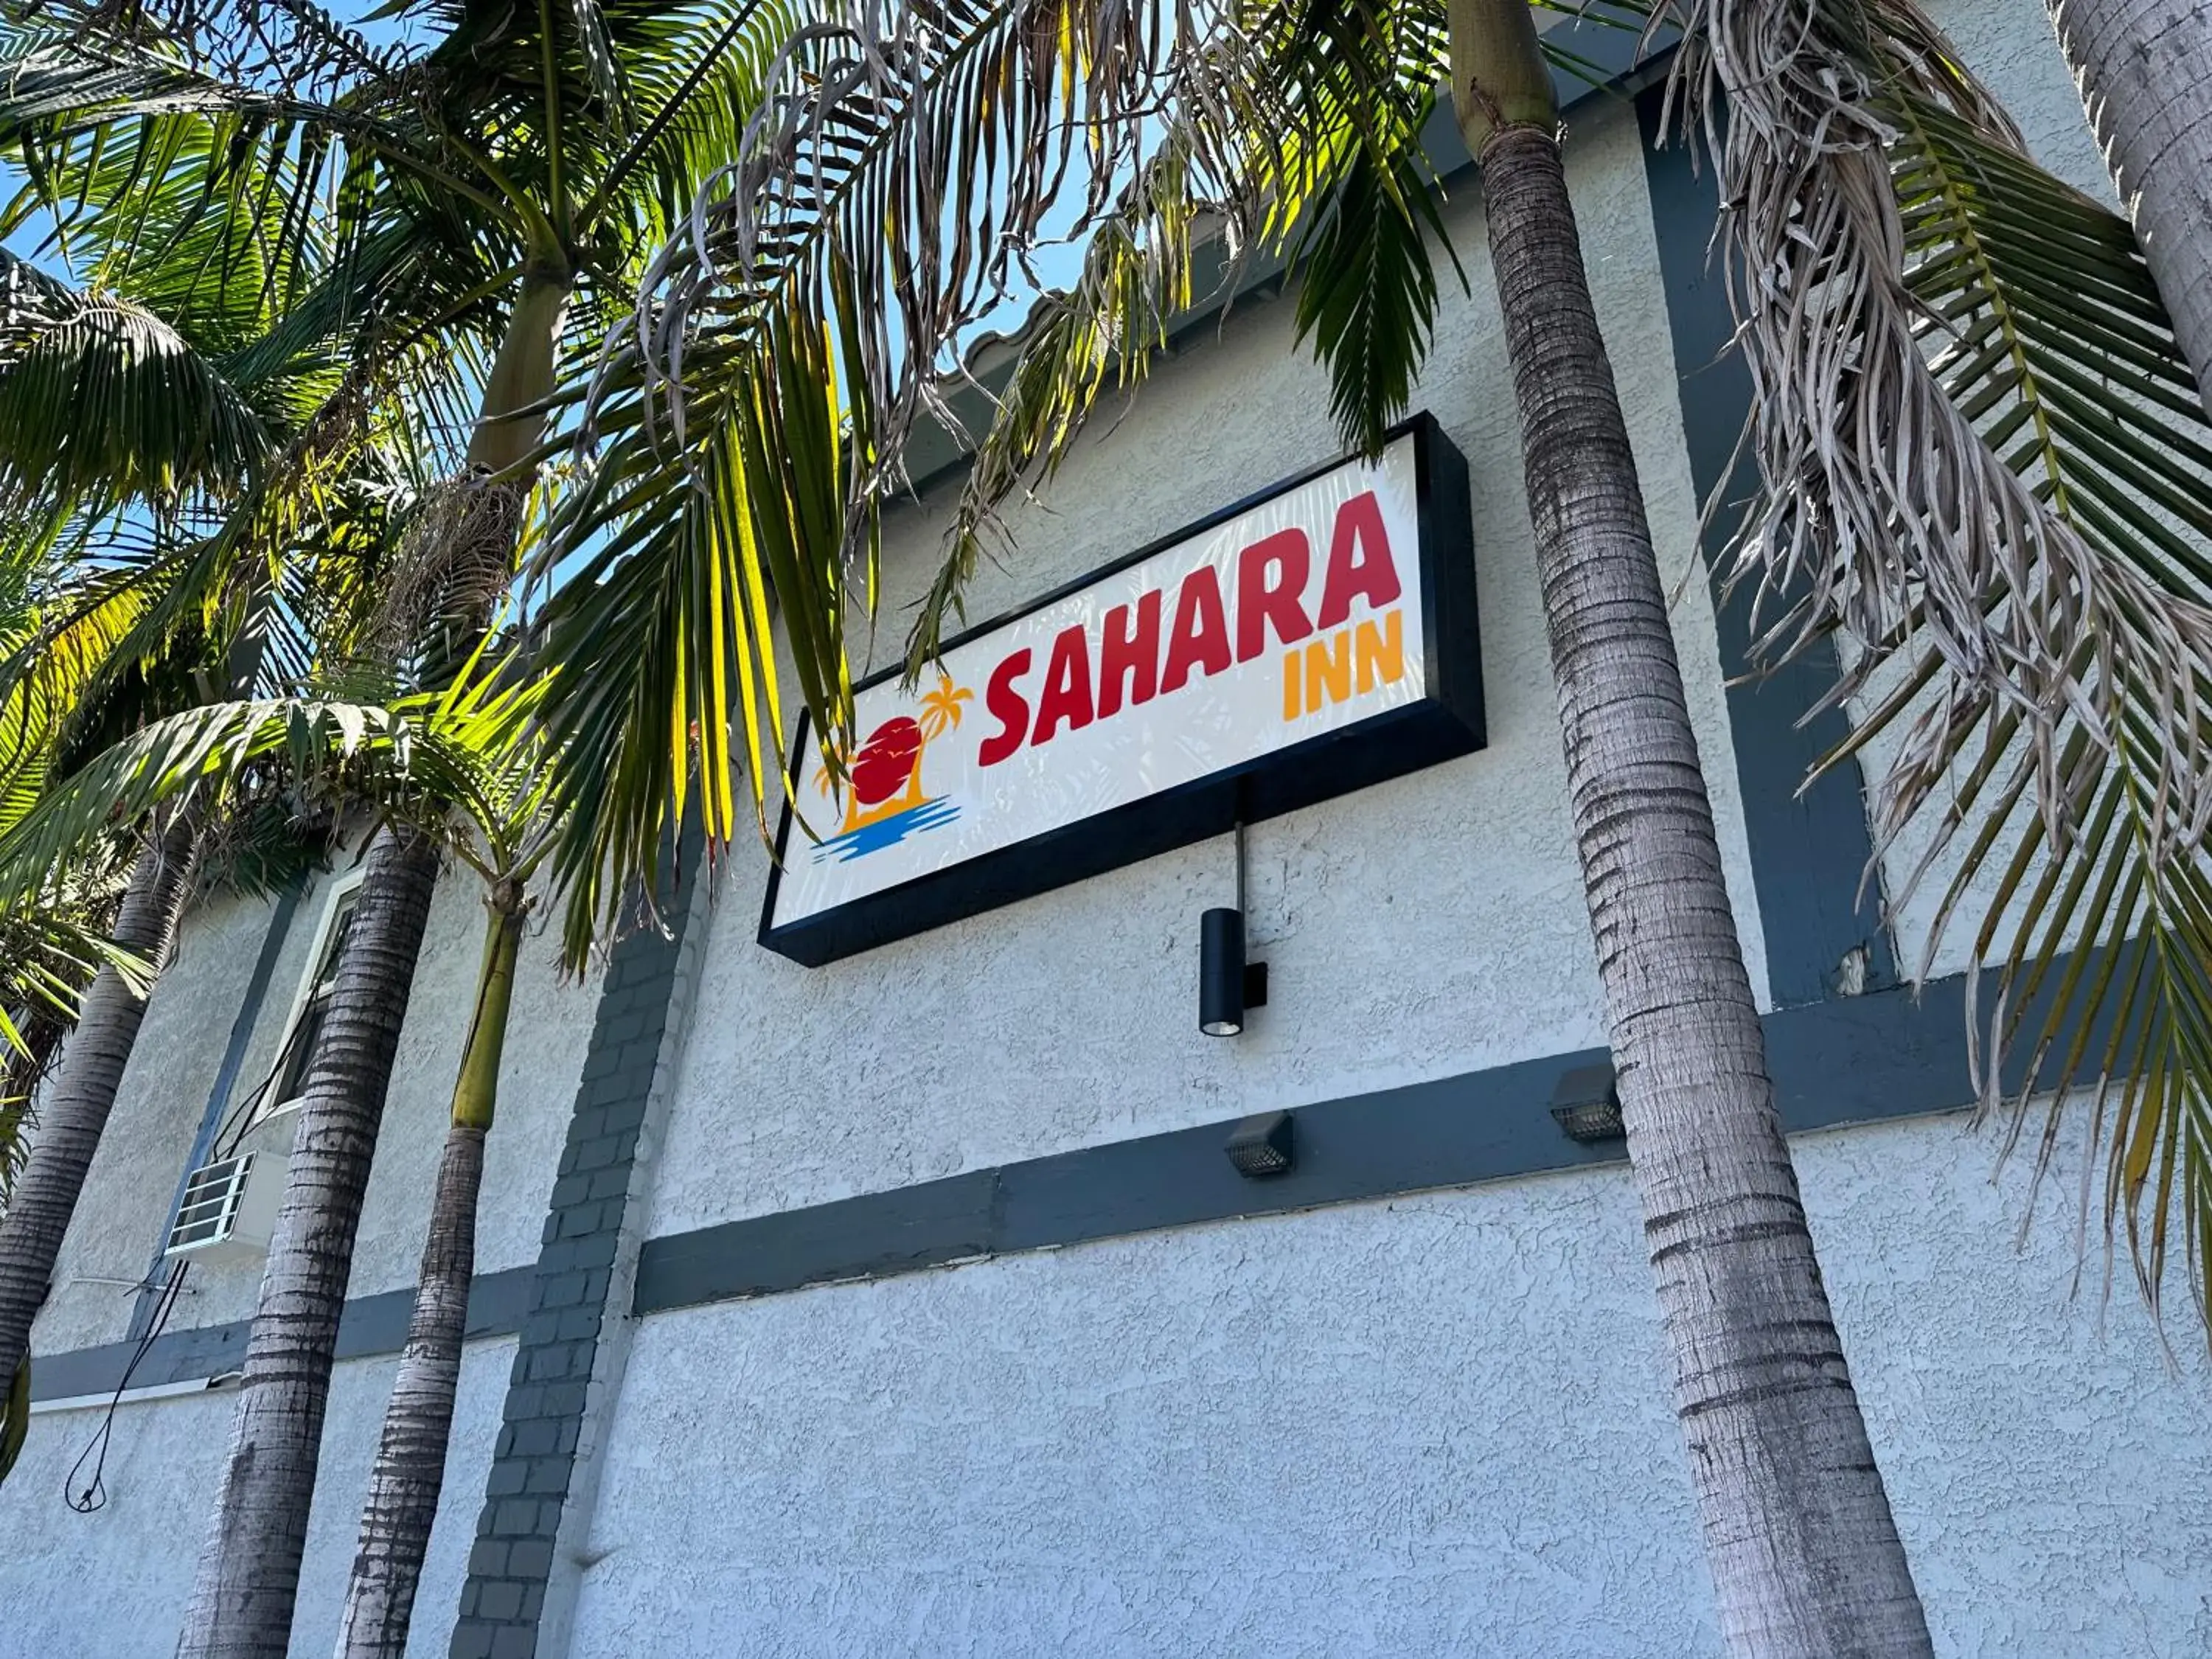 Sahara Inn - Los Angeles